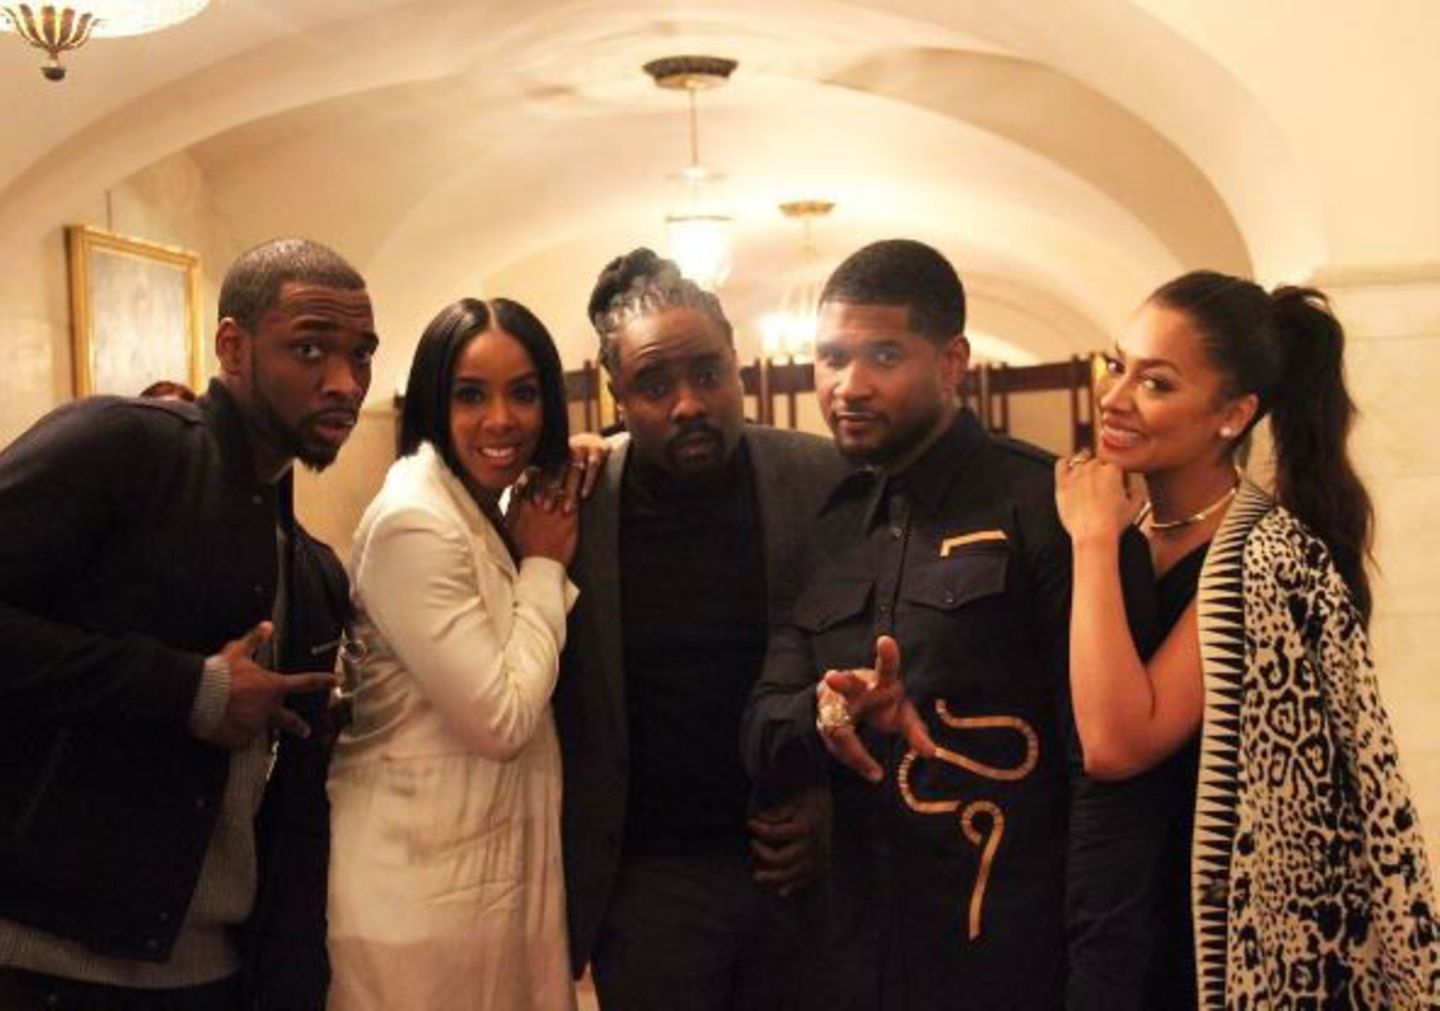 Comedian Jay Pharoah, Sängerin Kelly Rowland, die Rapper Wale und Usher sowie Musikerin La La Anthony (v. l. n. r.) sind ein unschlagbares Partyteam.